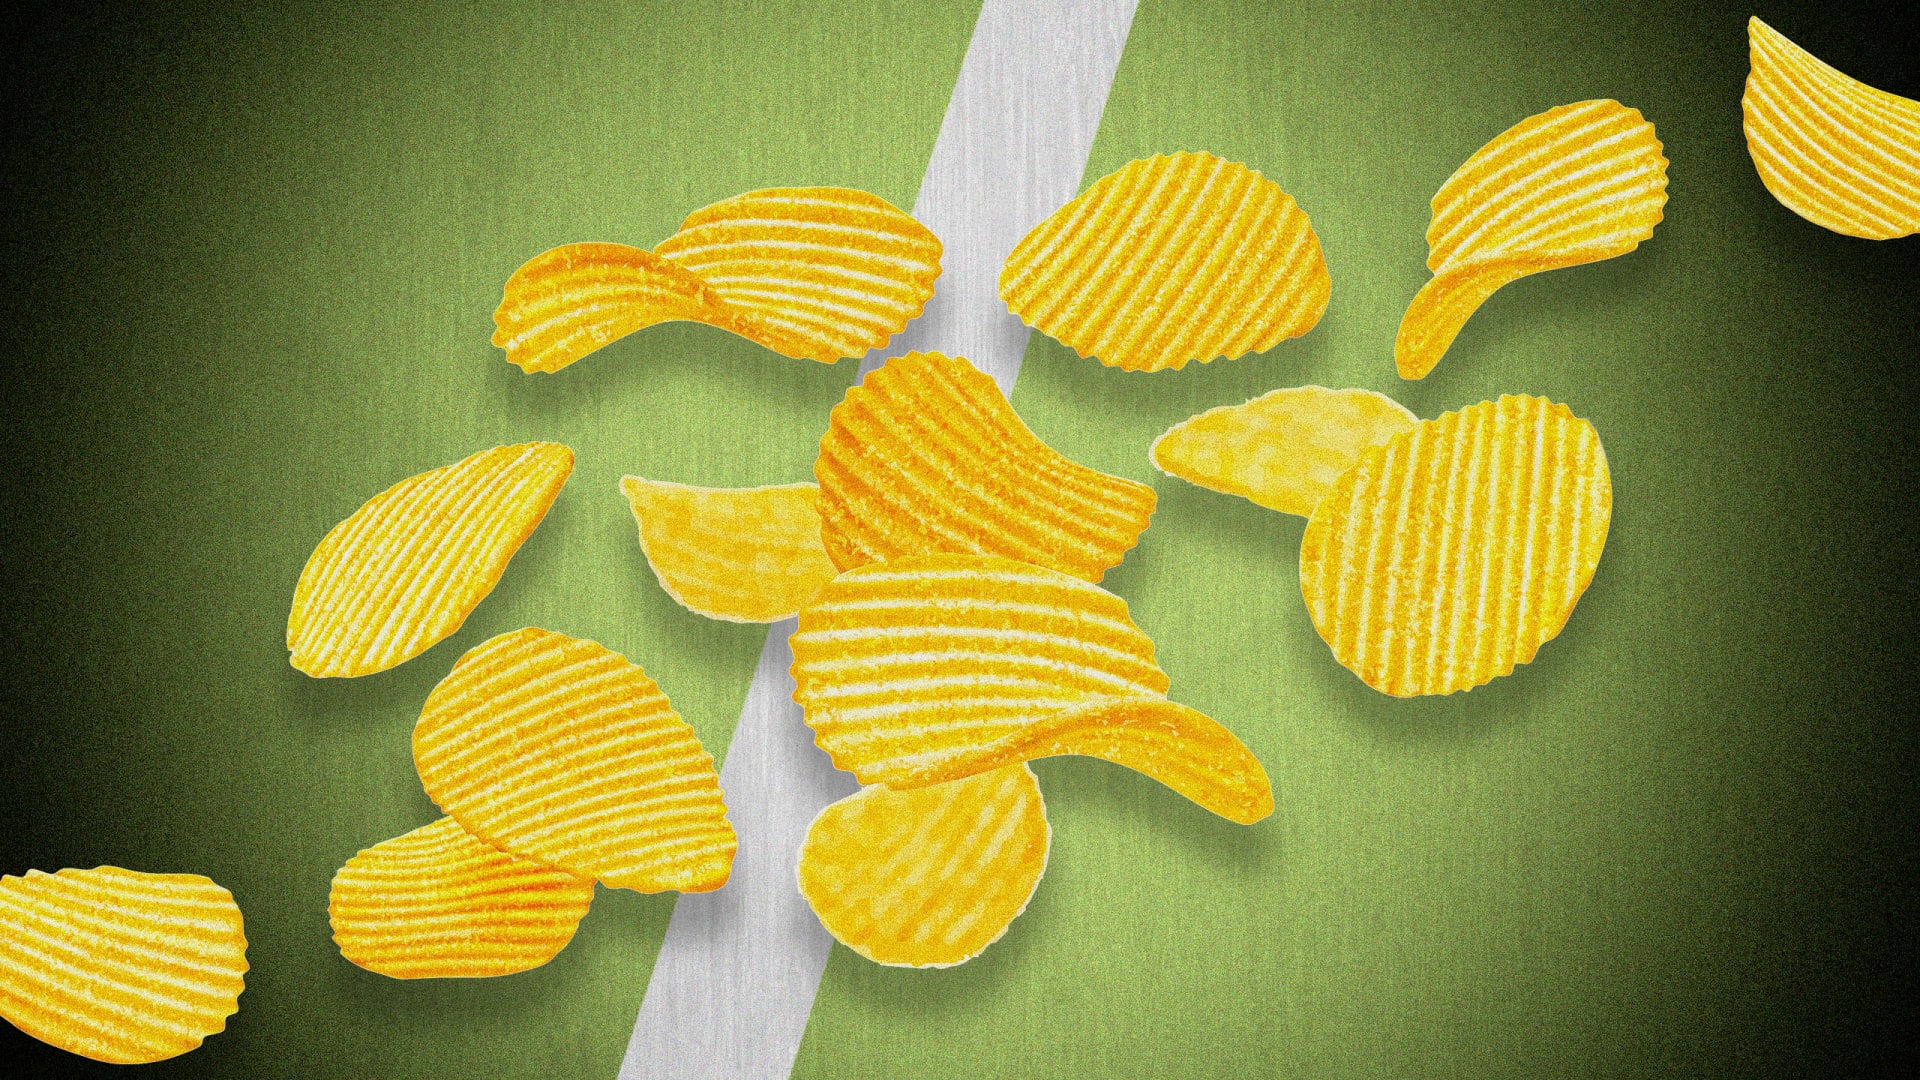 Frito-Lay’s CMO talks Doritos, Super Bowl ads, and the future of snack marketing